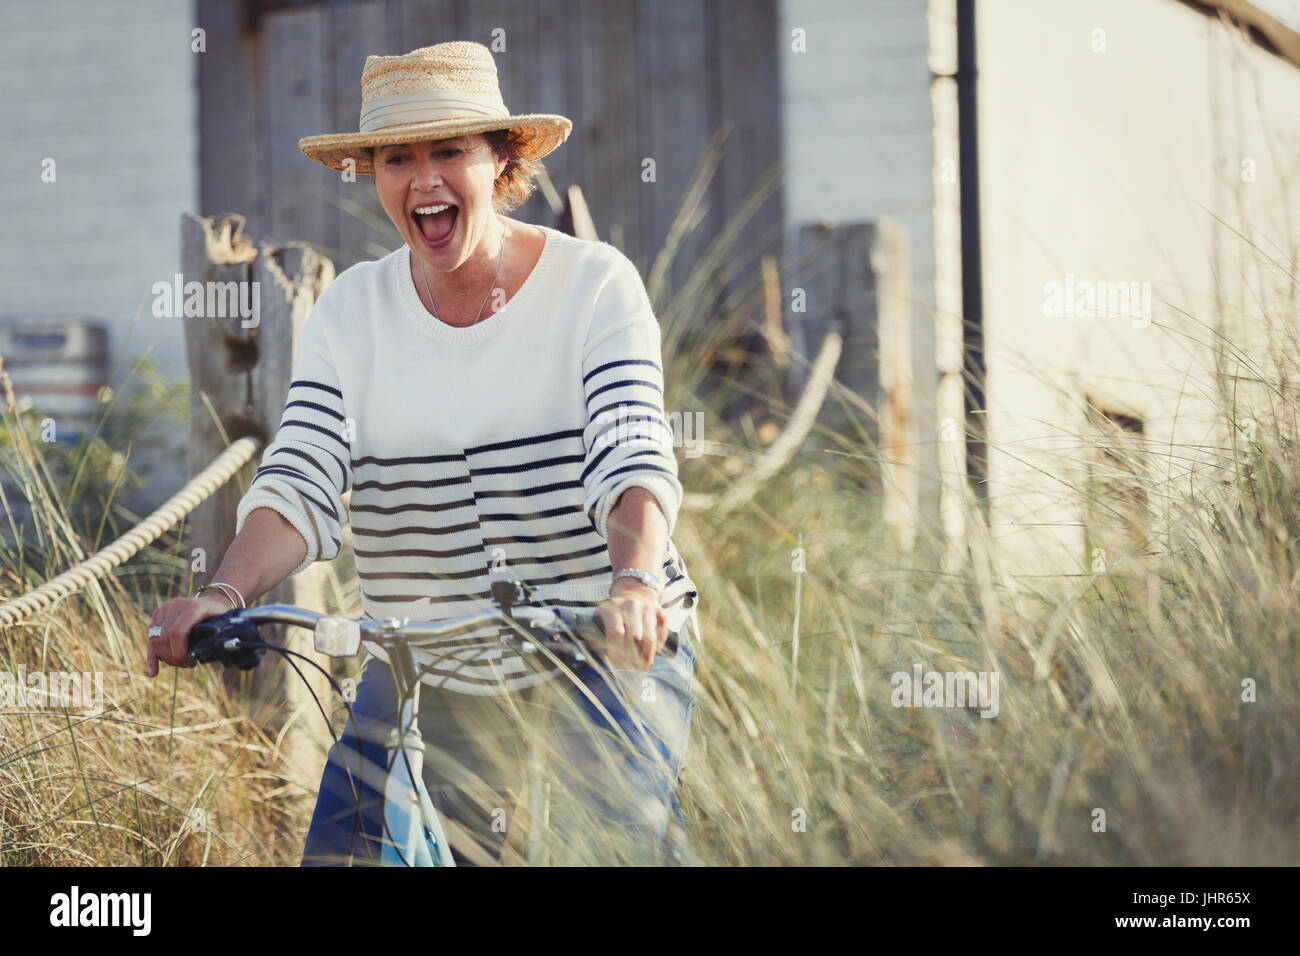 Playful mature woman riding bicycle on beach grass path Stock Photo